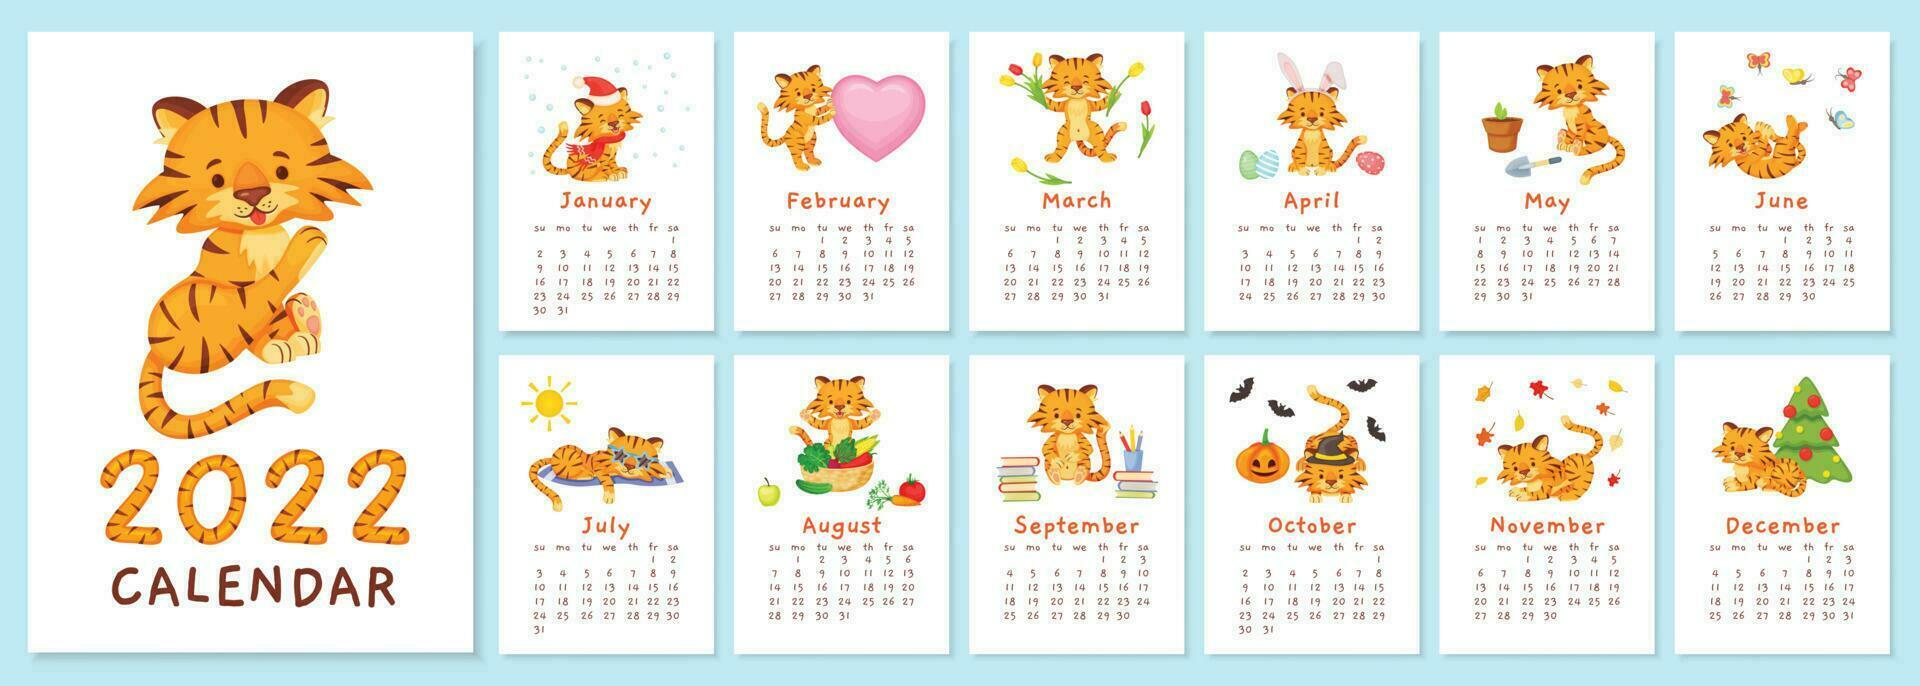 linda tigres 2022 calendario, chino nuevo año Tigre símbolo. dibujos animados contento bebé animal caracteres en diferente meses planificador vector modelo